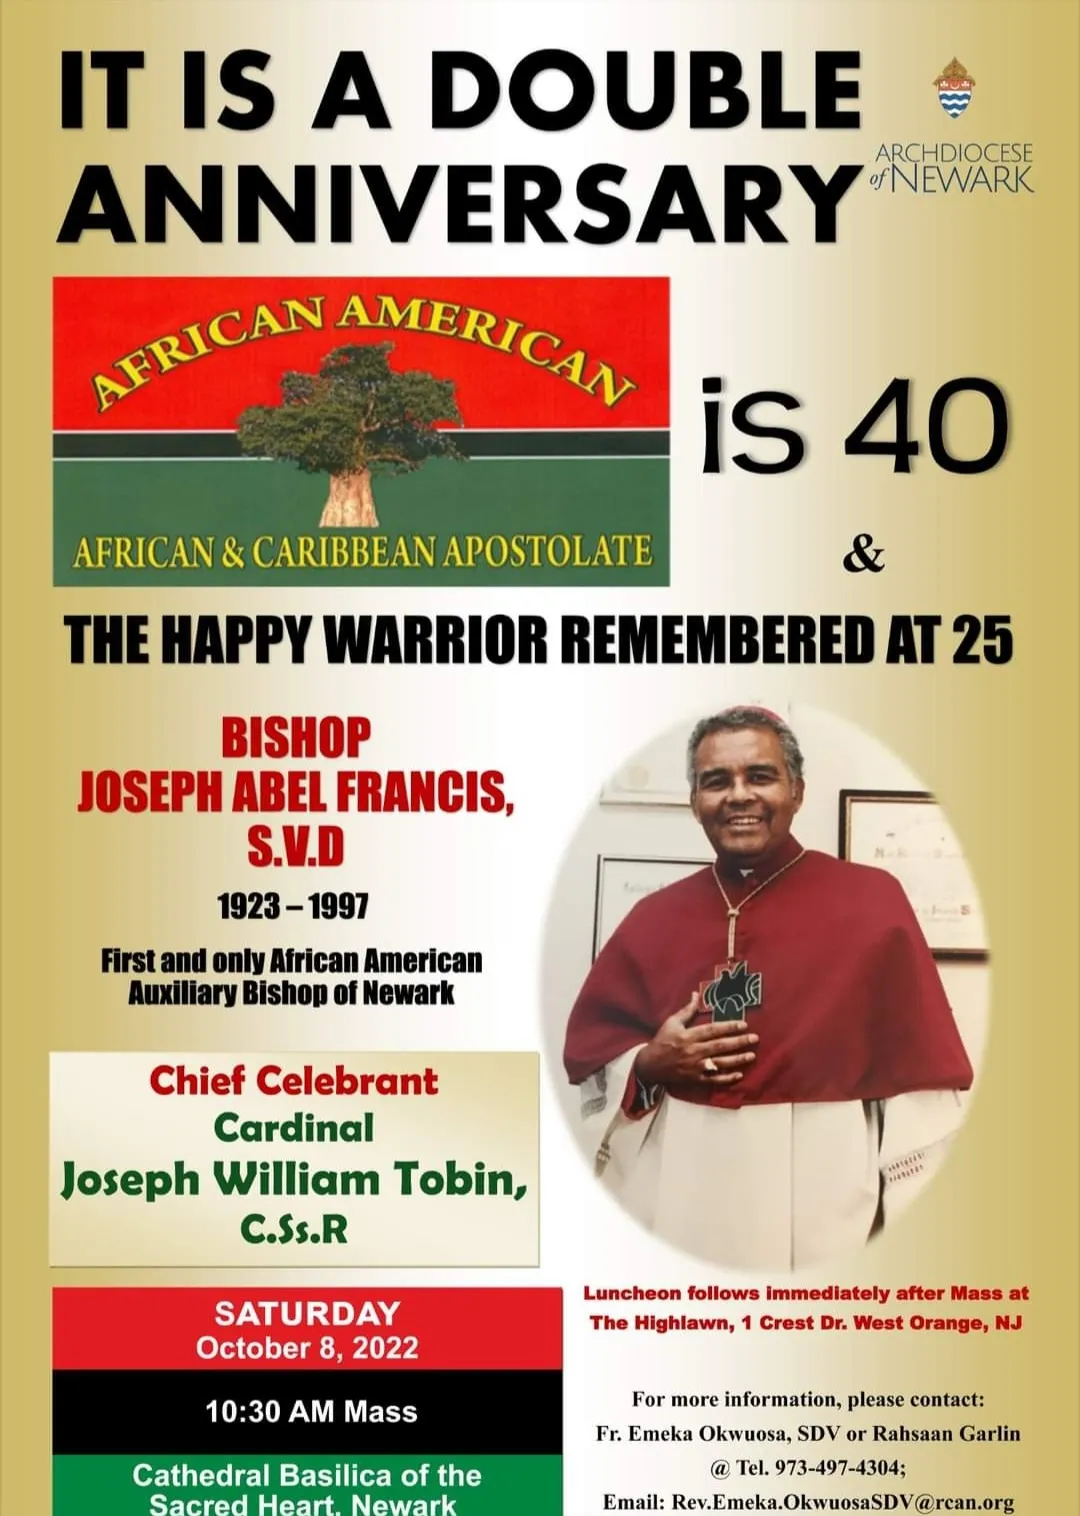 Archdiocese of Newark to celebrate late Black bishop, diaspora ministry on Saturday